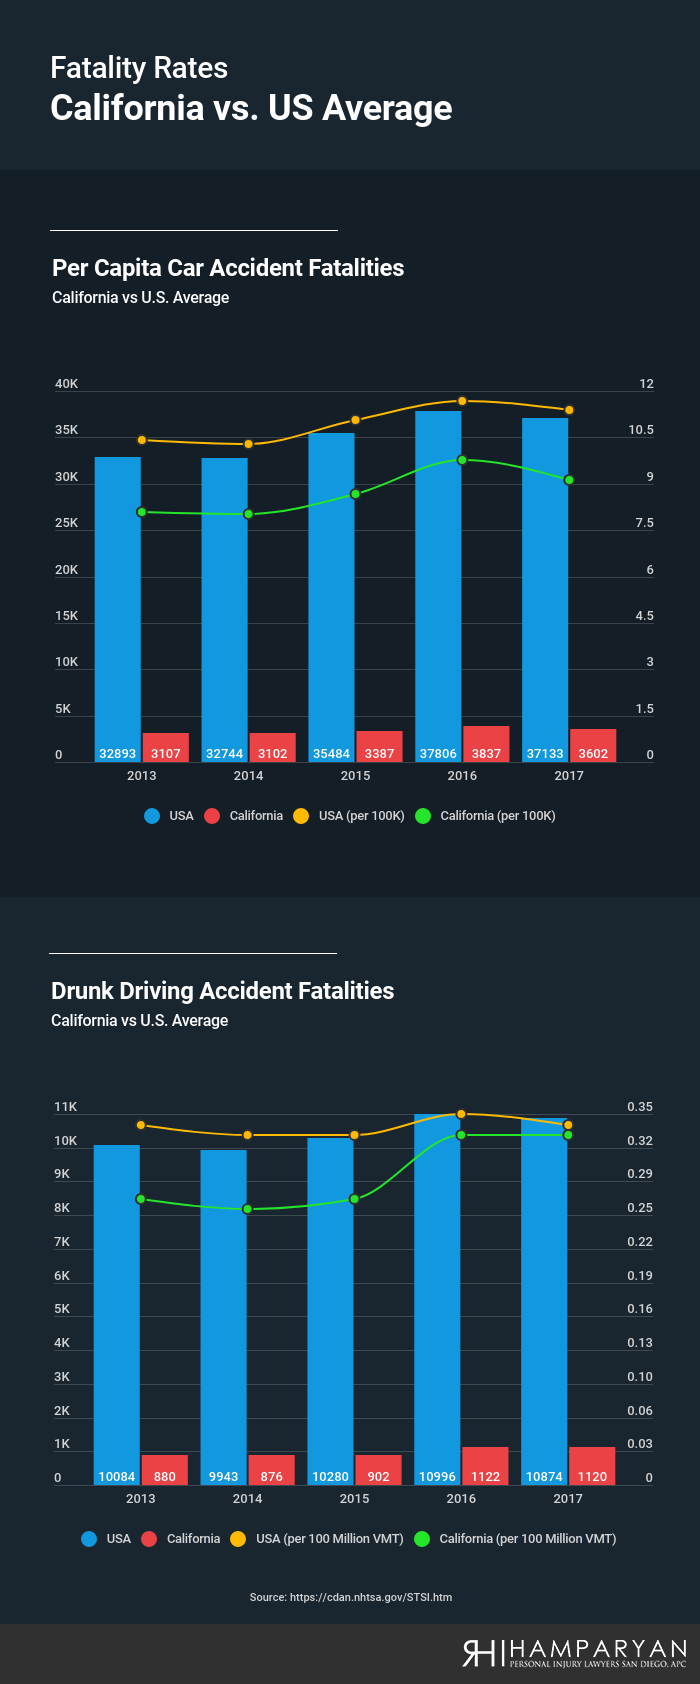 Fatality Rates: California vs. US Average